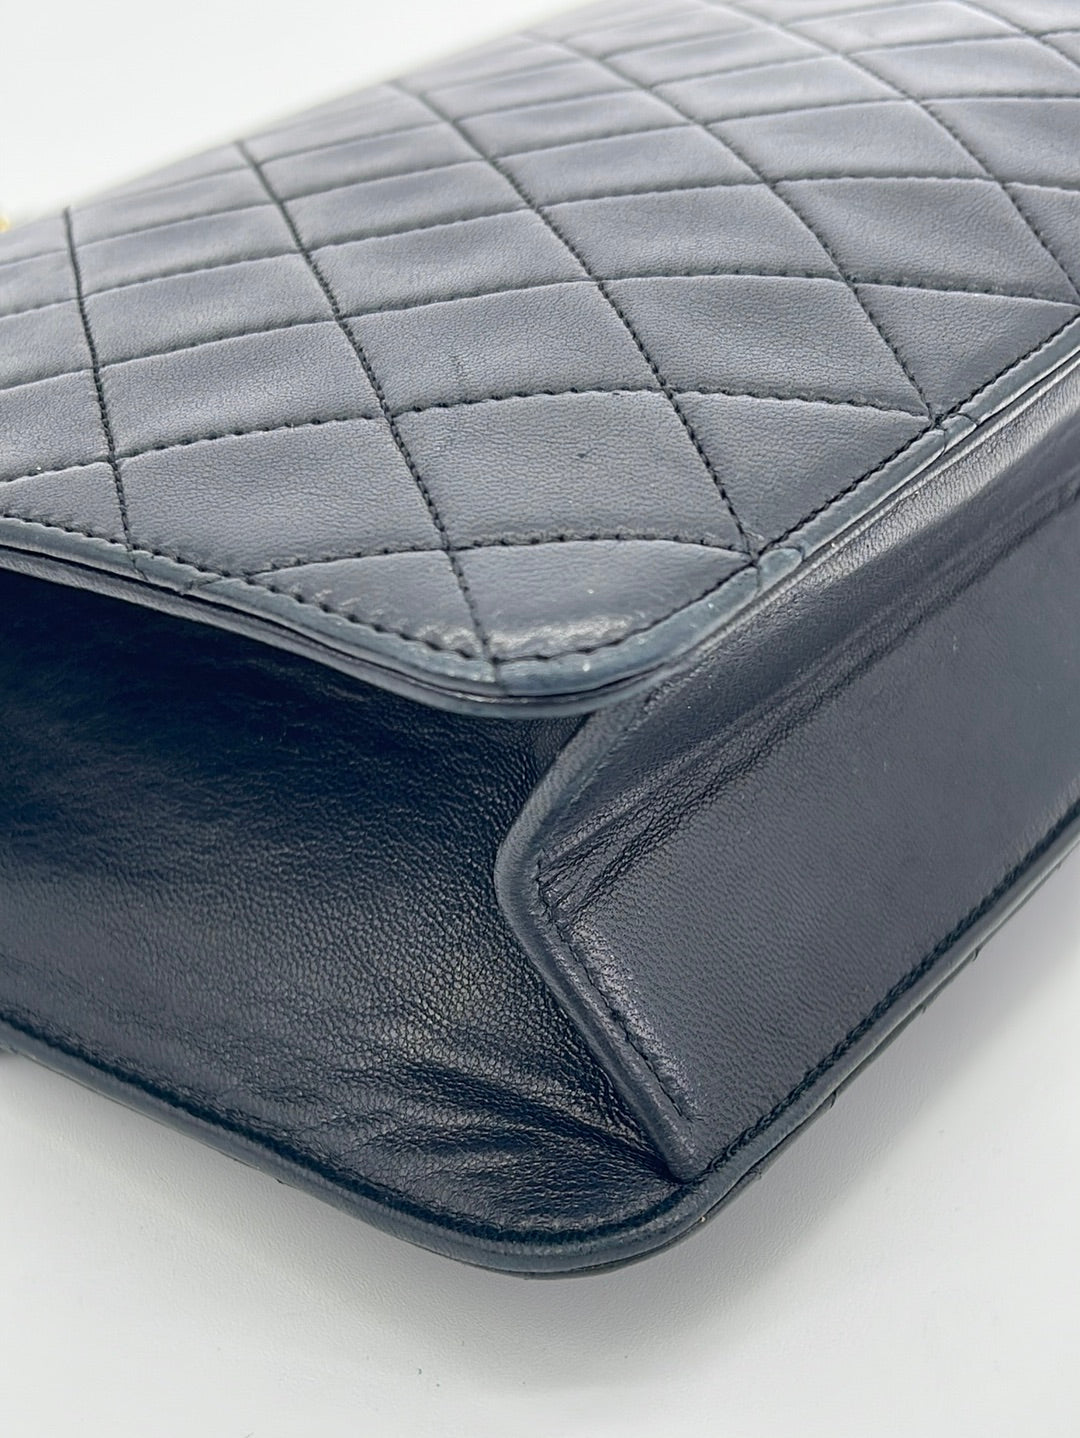 Vintage CHANEL Black Lambskin Classic Flap Bag 147902 040823 - $1100 OFF DEAL